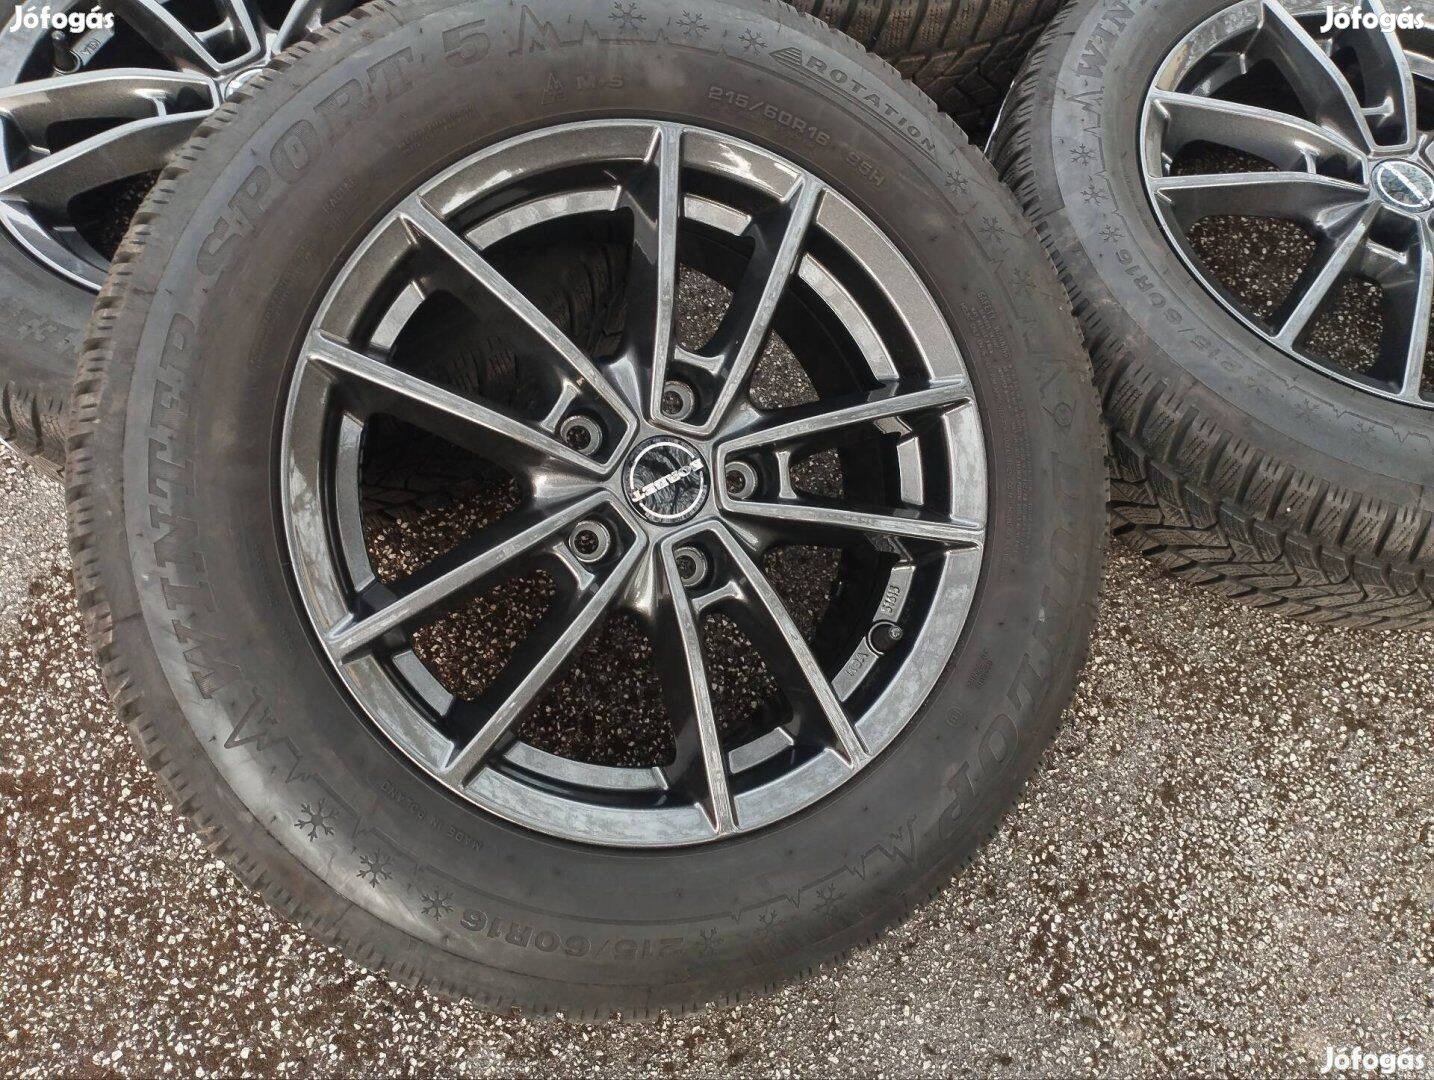 5x112 16 Borbet alufelni - Dunlop 215/60 r16 " téli VW Skoda Seat